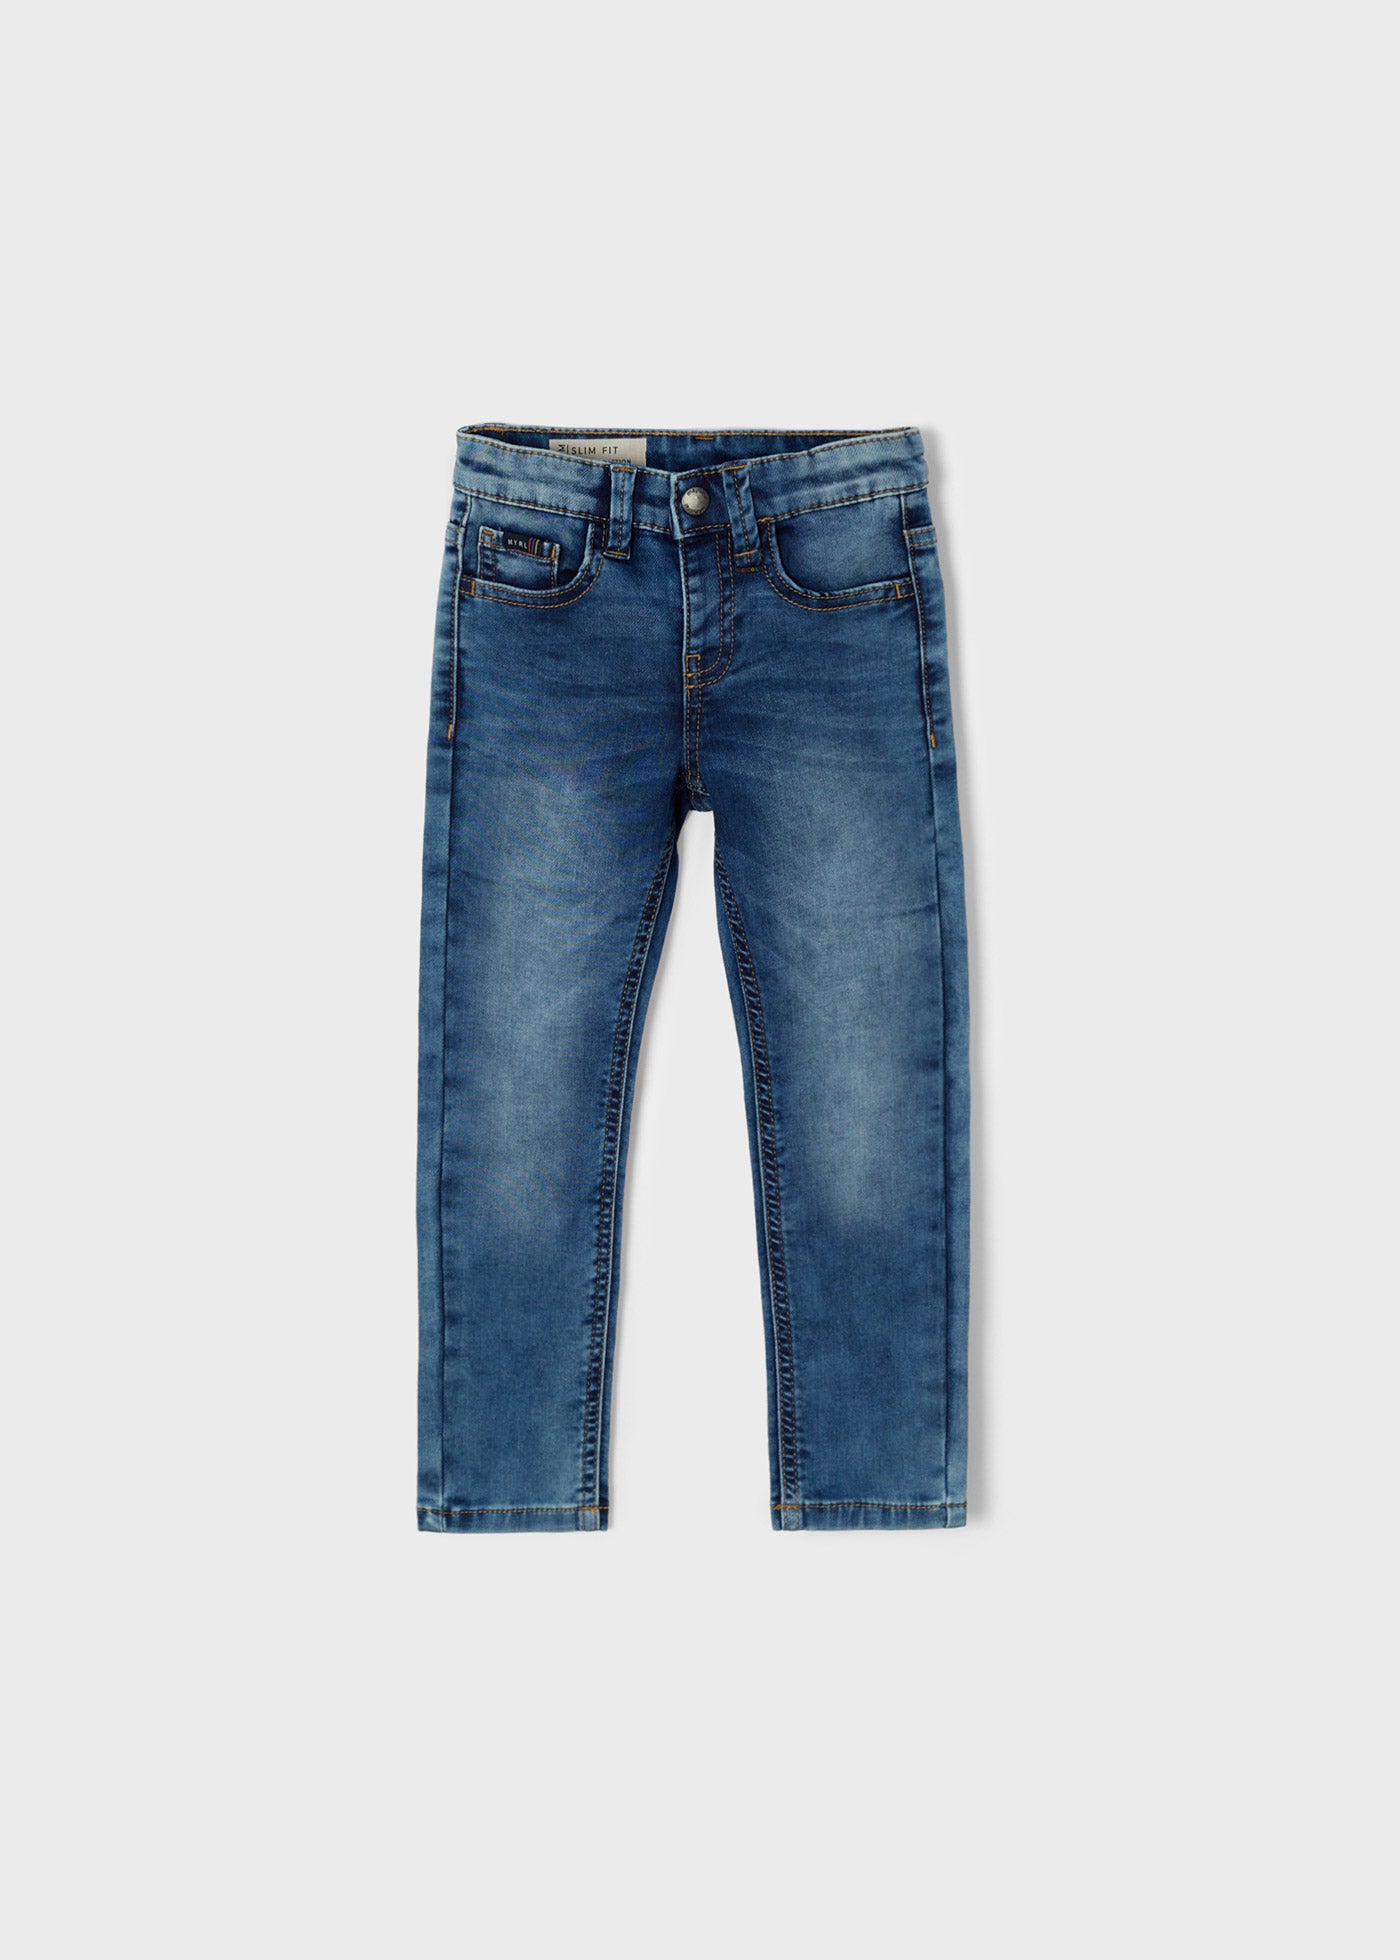 Mayoral Mini Soft Jeans_ Medium Blue 3578-94